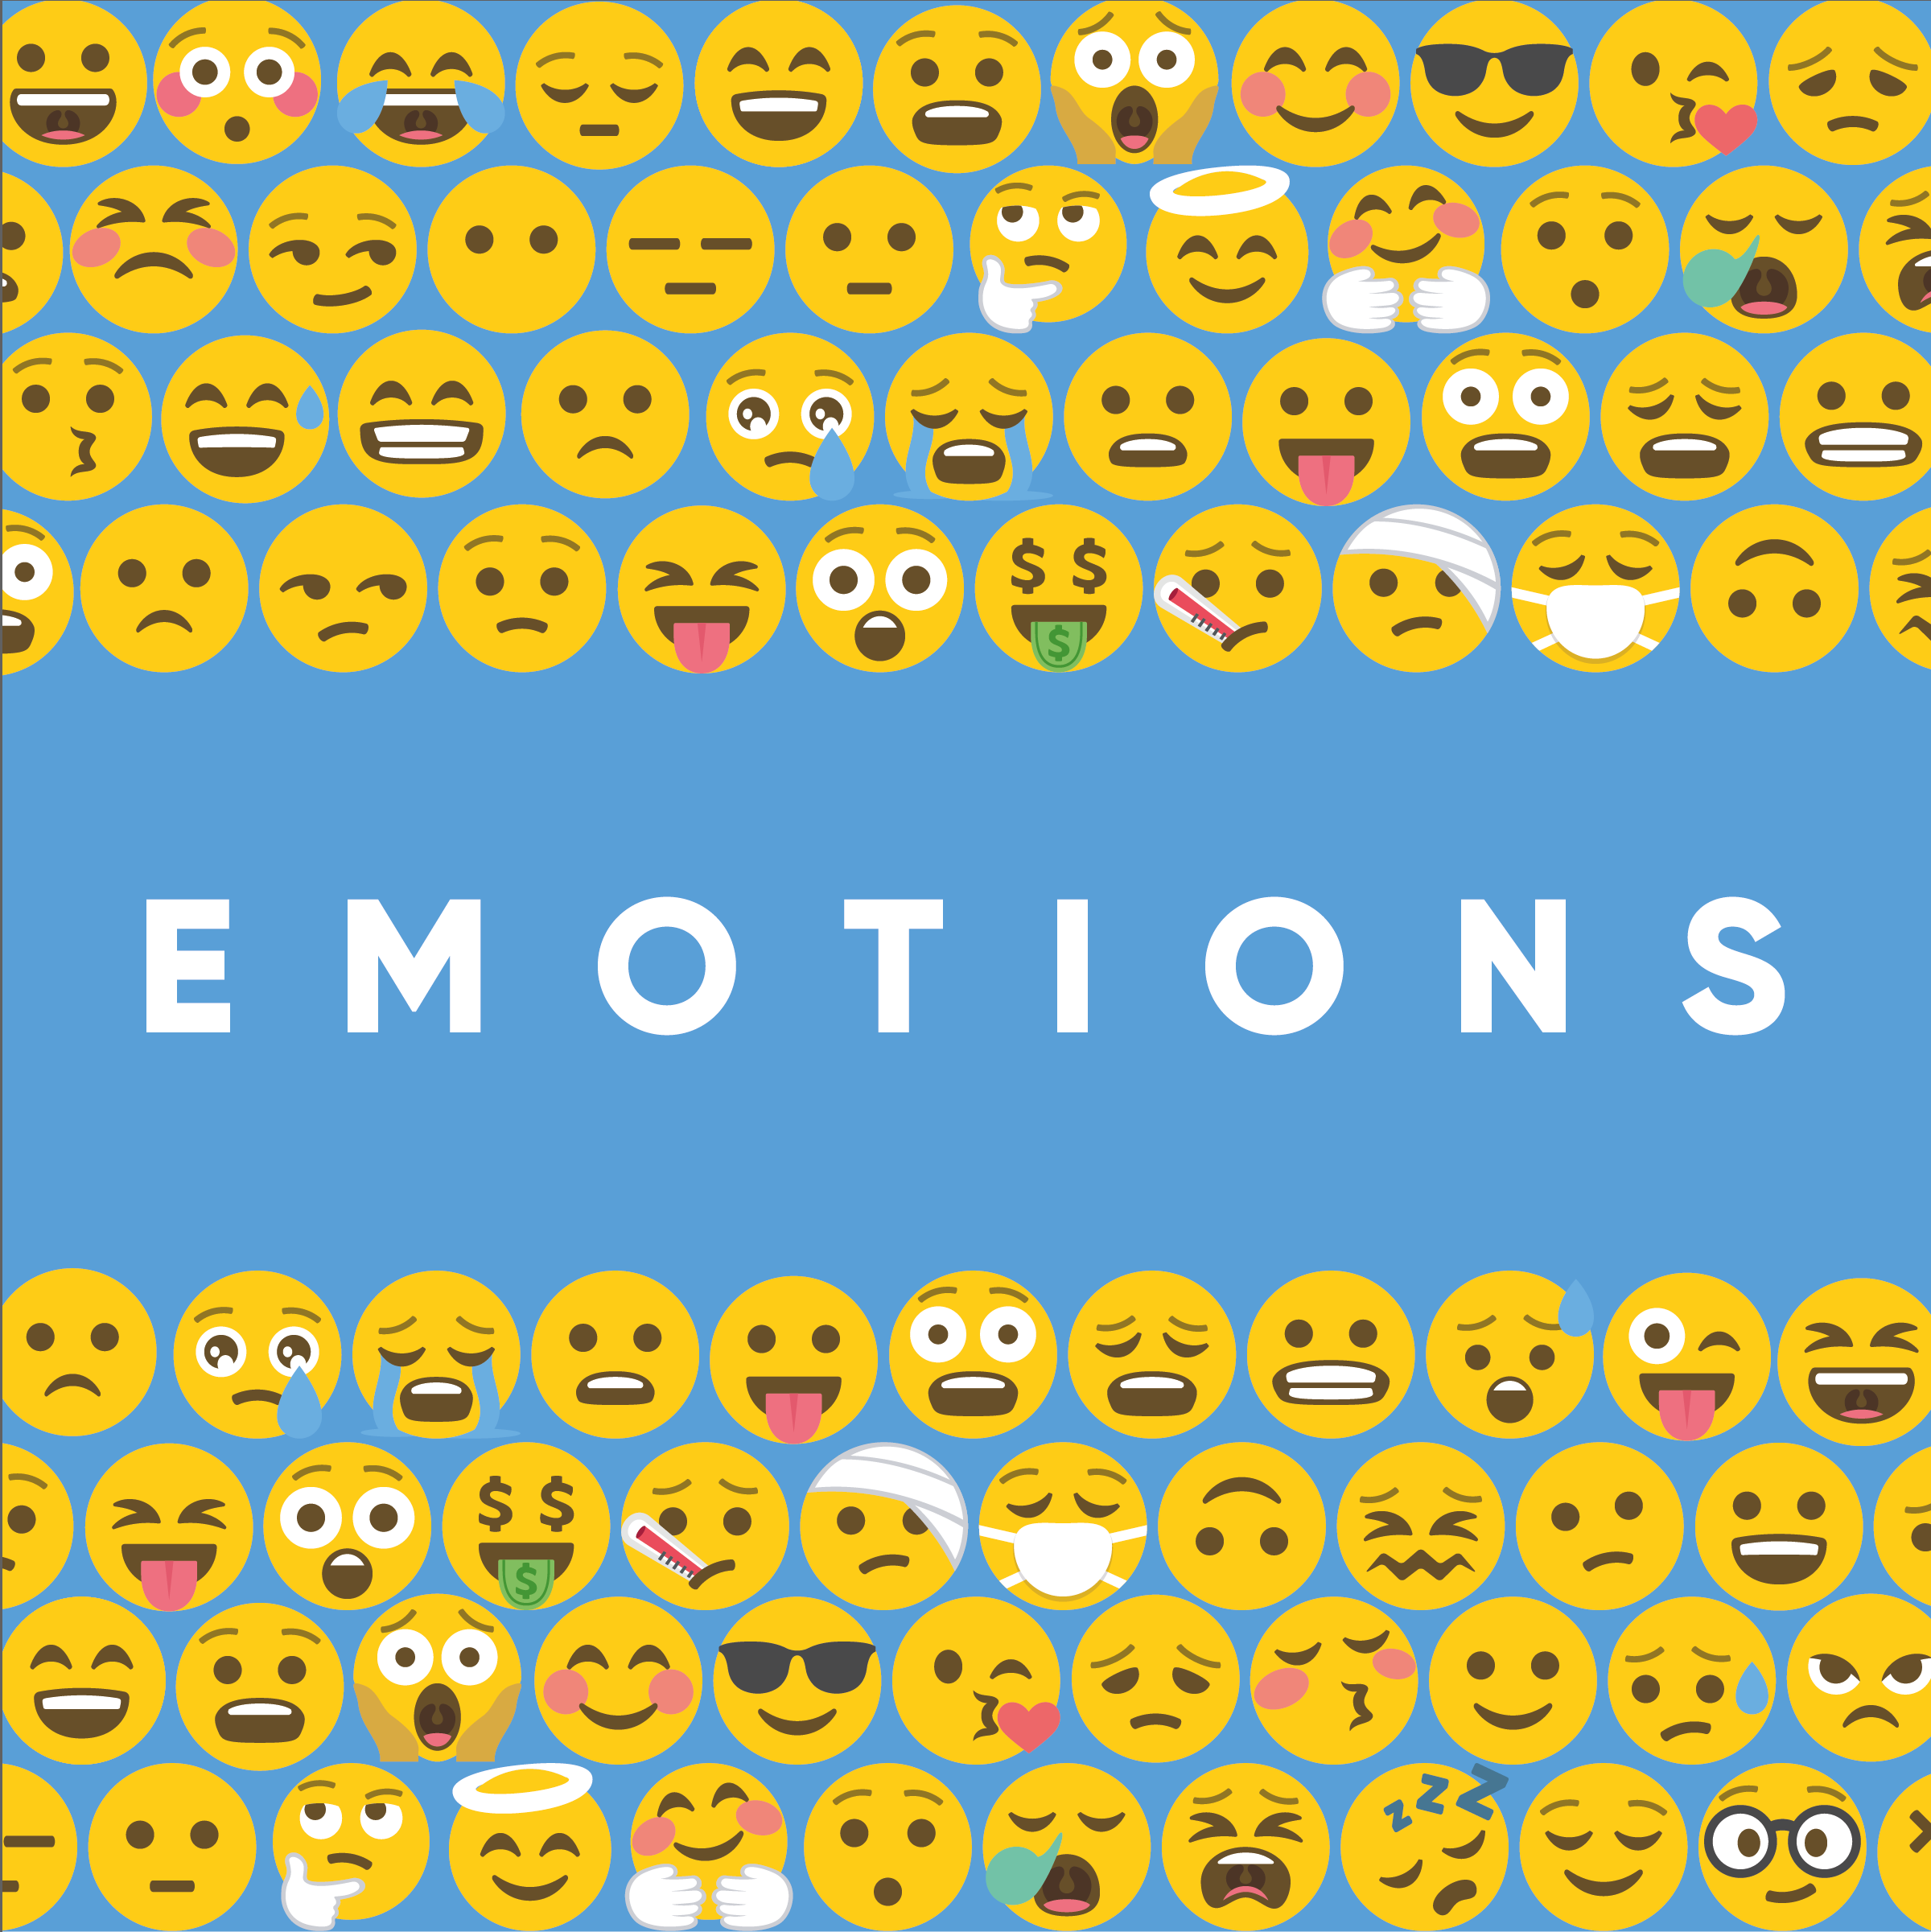 Emotions // A Conversation